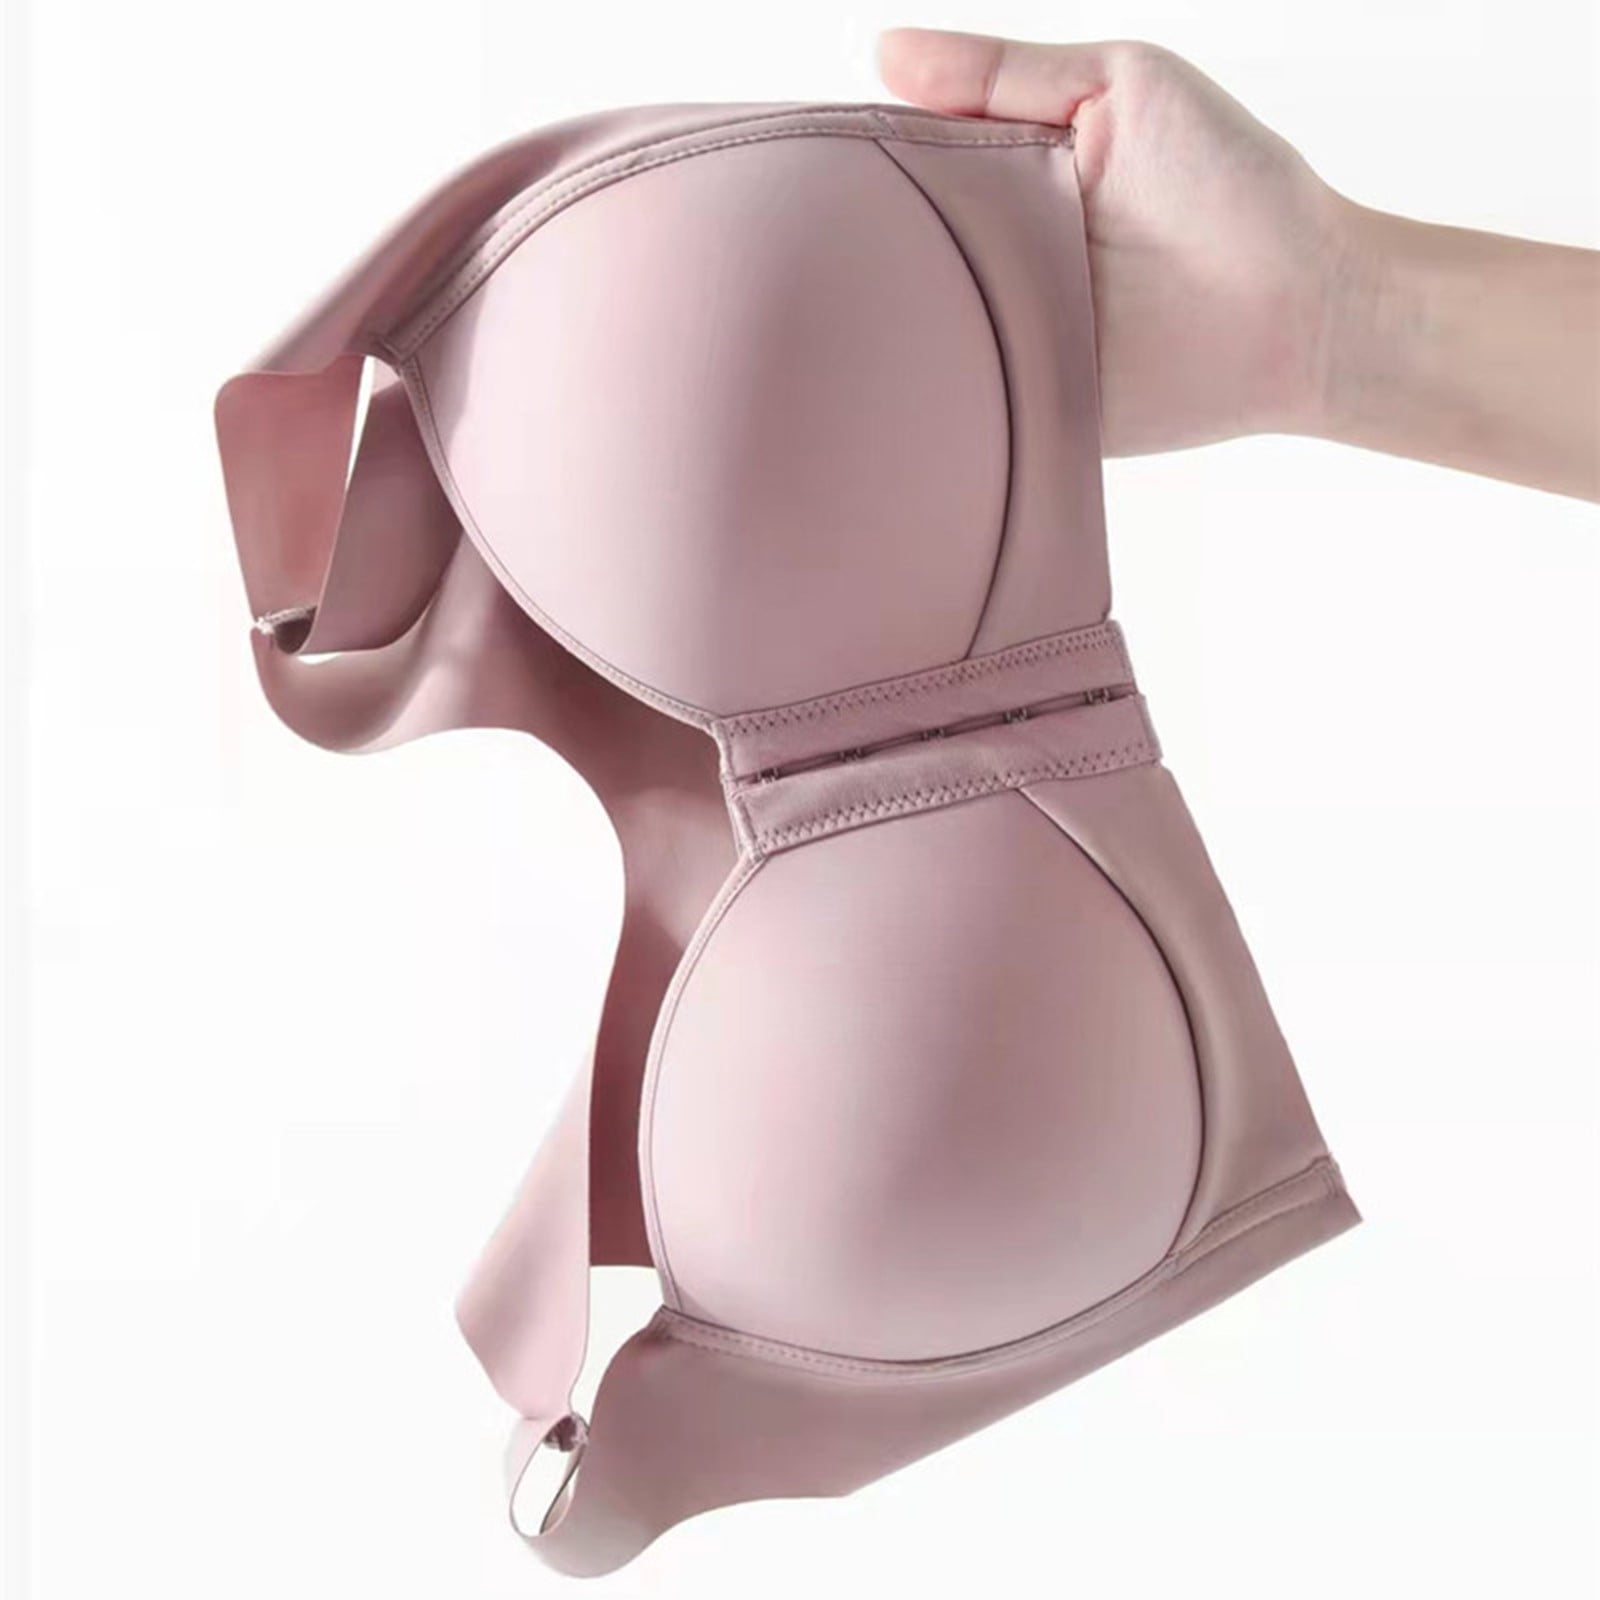 Fsqjgq Push up Bra for Women Gathered Padded Wireless Sports Bra Lingerie  Solid Seamless Breathable Brassiere Crop Top Underwear Pink 75C